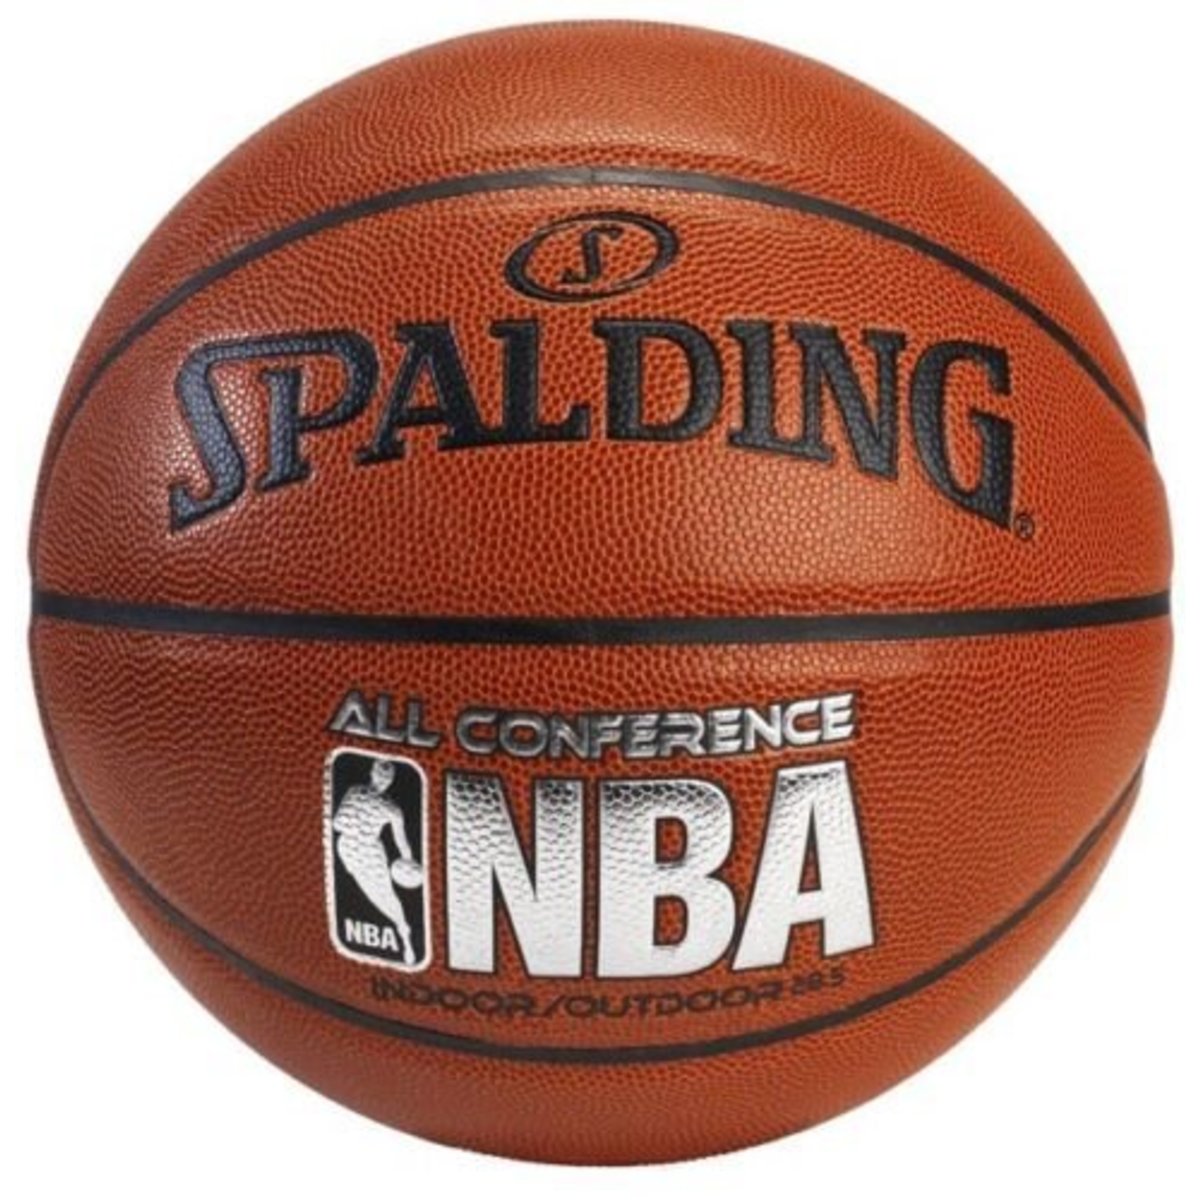 2019-spalding-all-conference-indoor-outdoor-basketball-intermediate